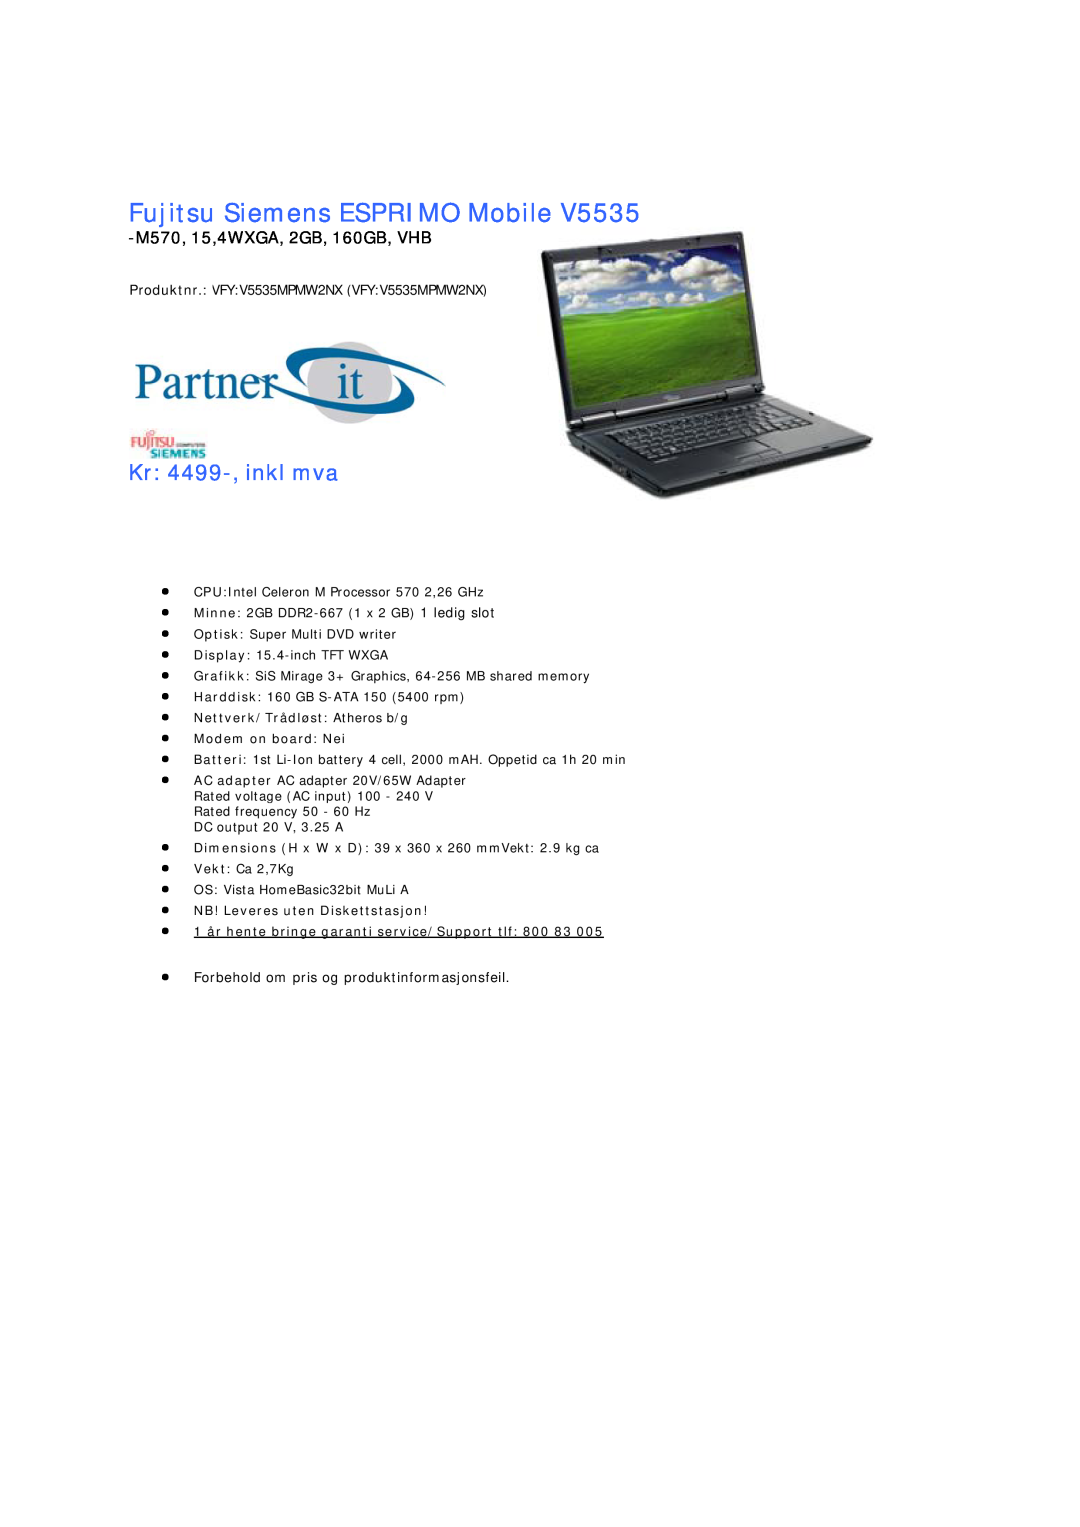 Acer 5735Z PMD T3400 manual Fujitsu Siemens ESPRIMO Mobile, Kr 4499-, inkl mva, M570, 15,4WXGA, 2GB, 160GB, VHB 